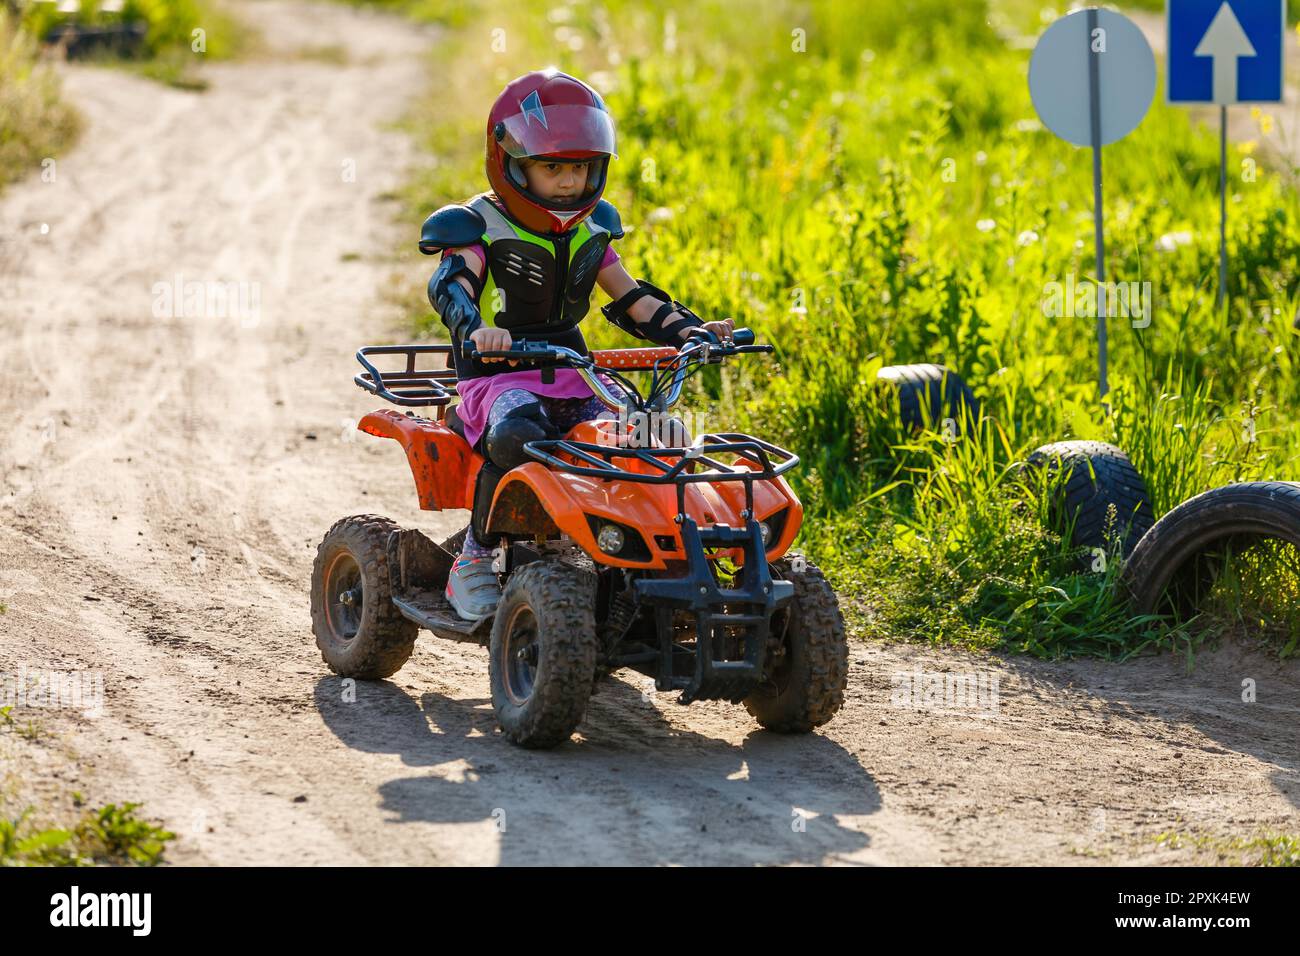 Little girl riding ATV quad bike in race track Stock Photo